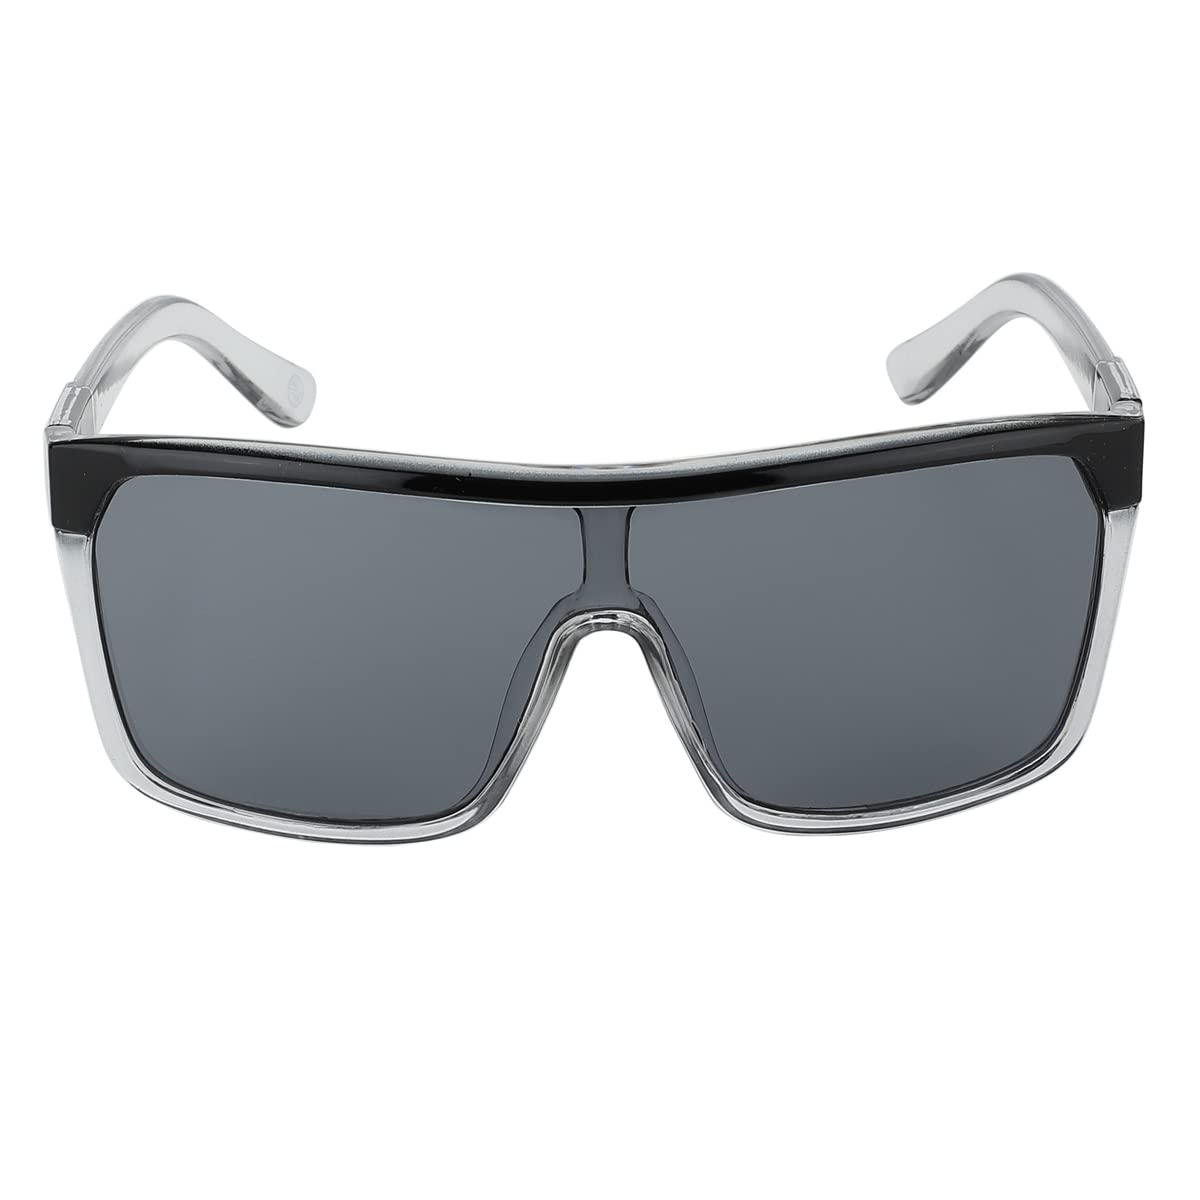 Carlton London Women UV Protected Shield Sunglasses 802-C1 